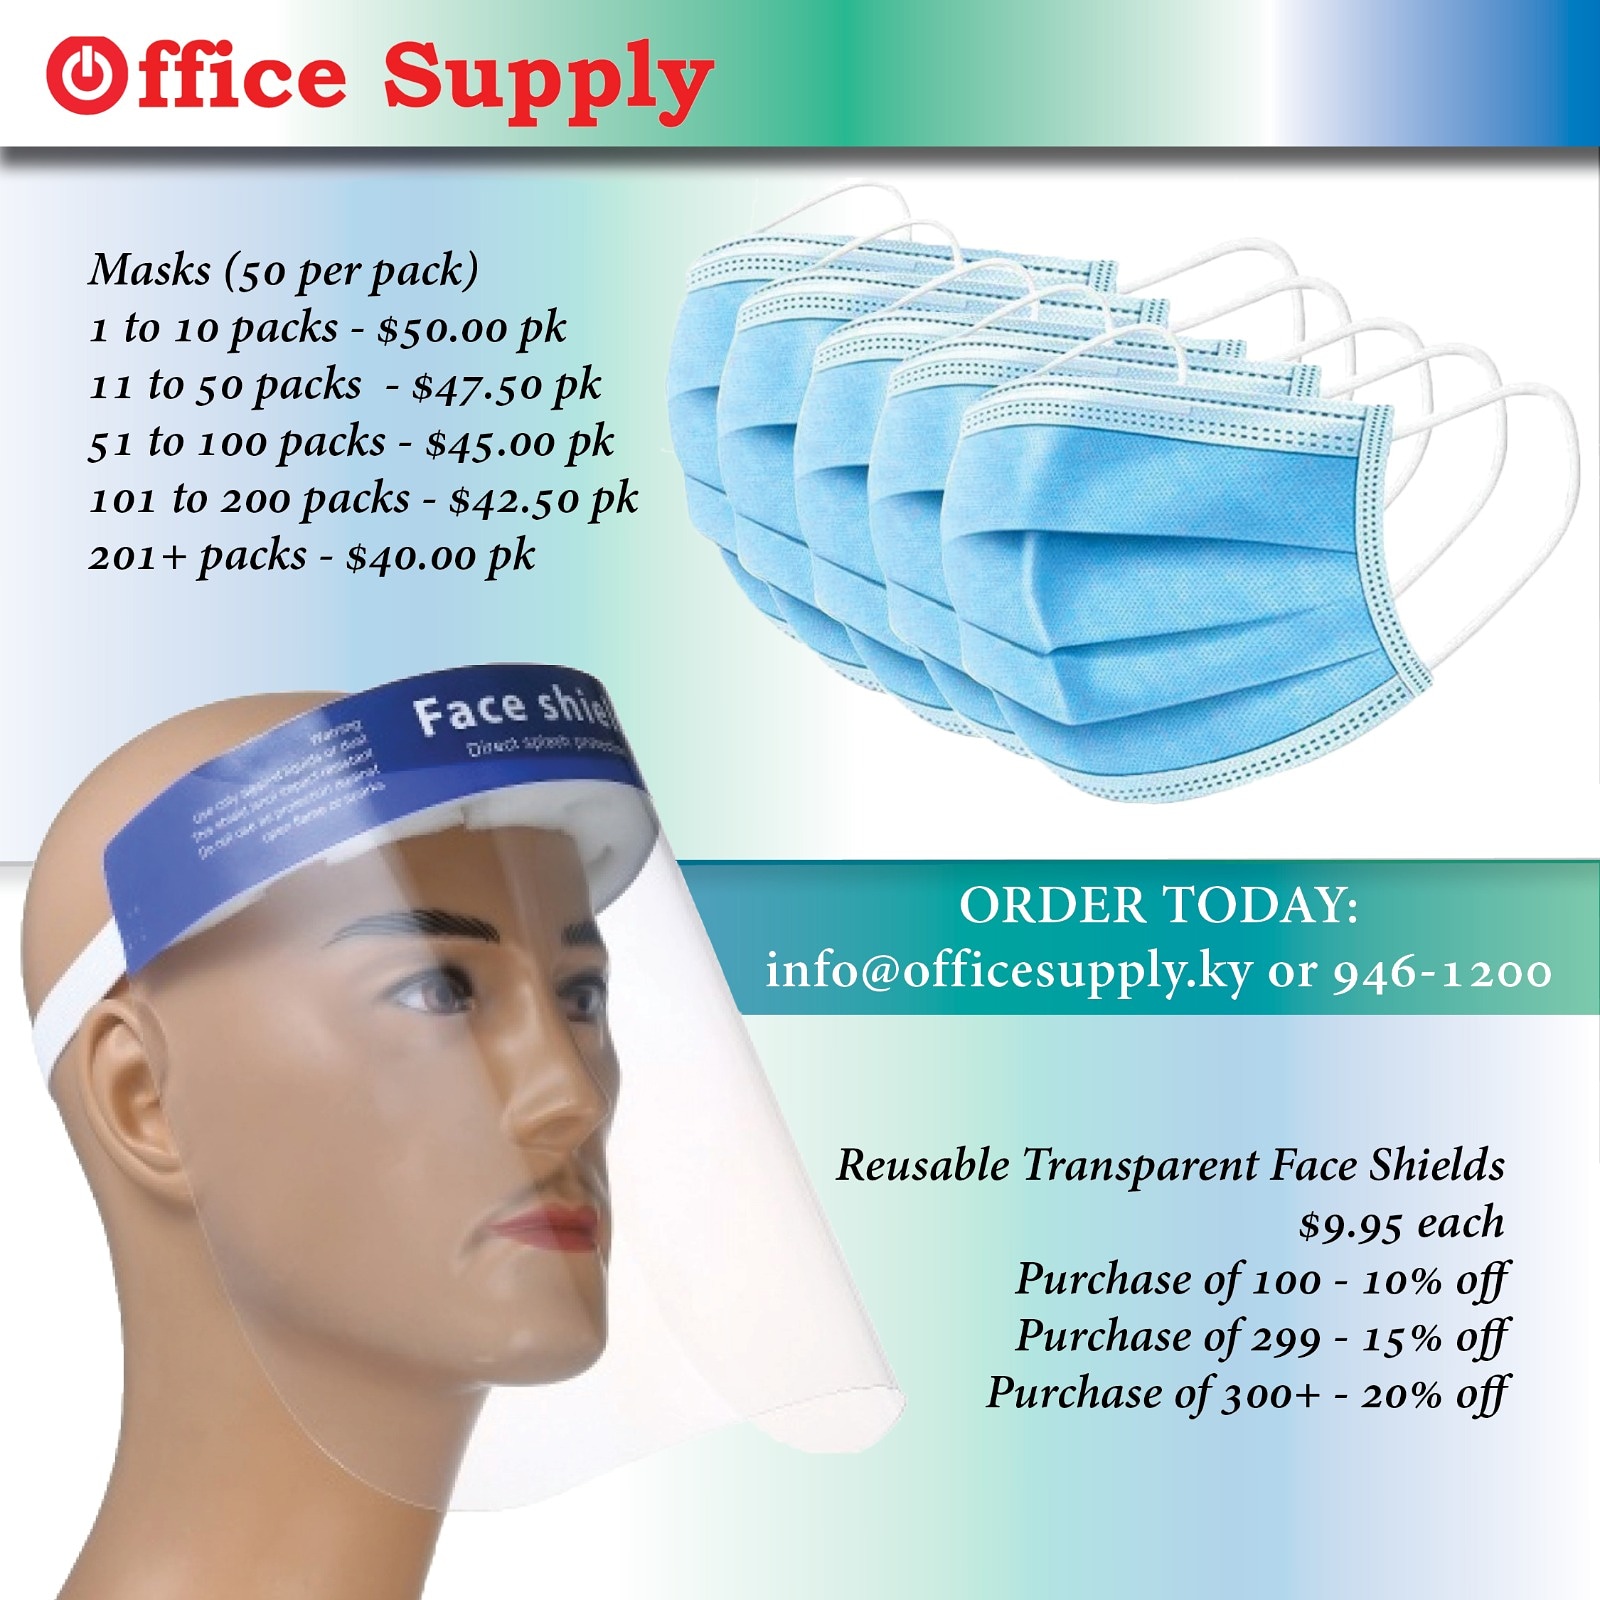 Office Supply (masks)